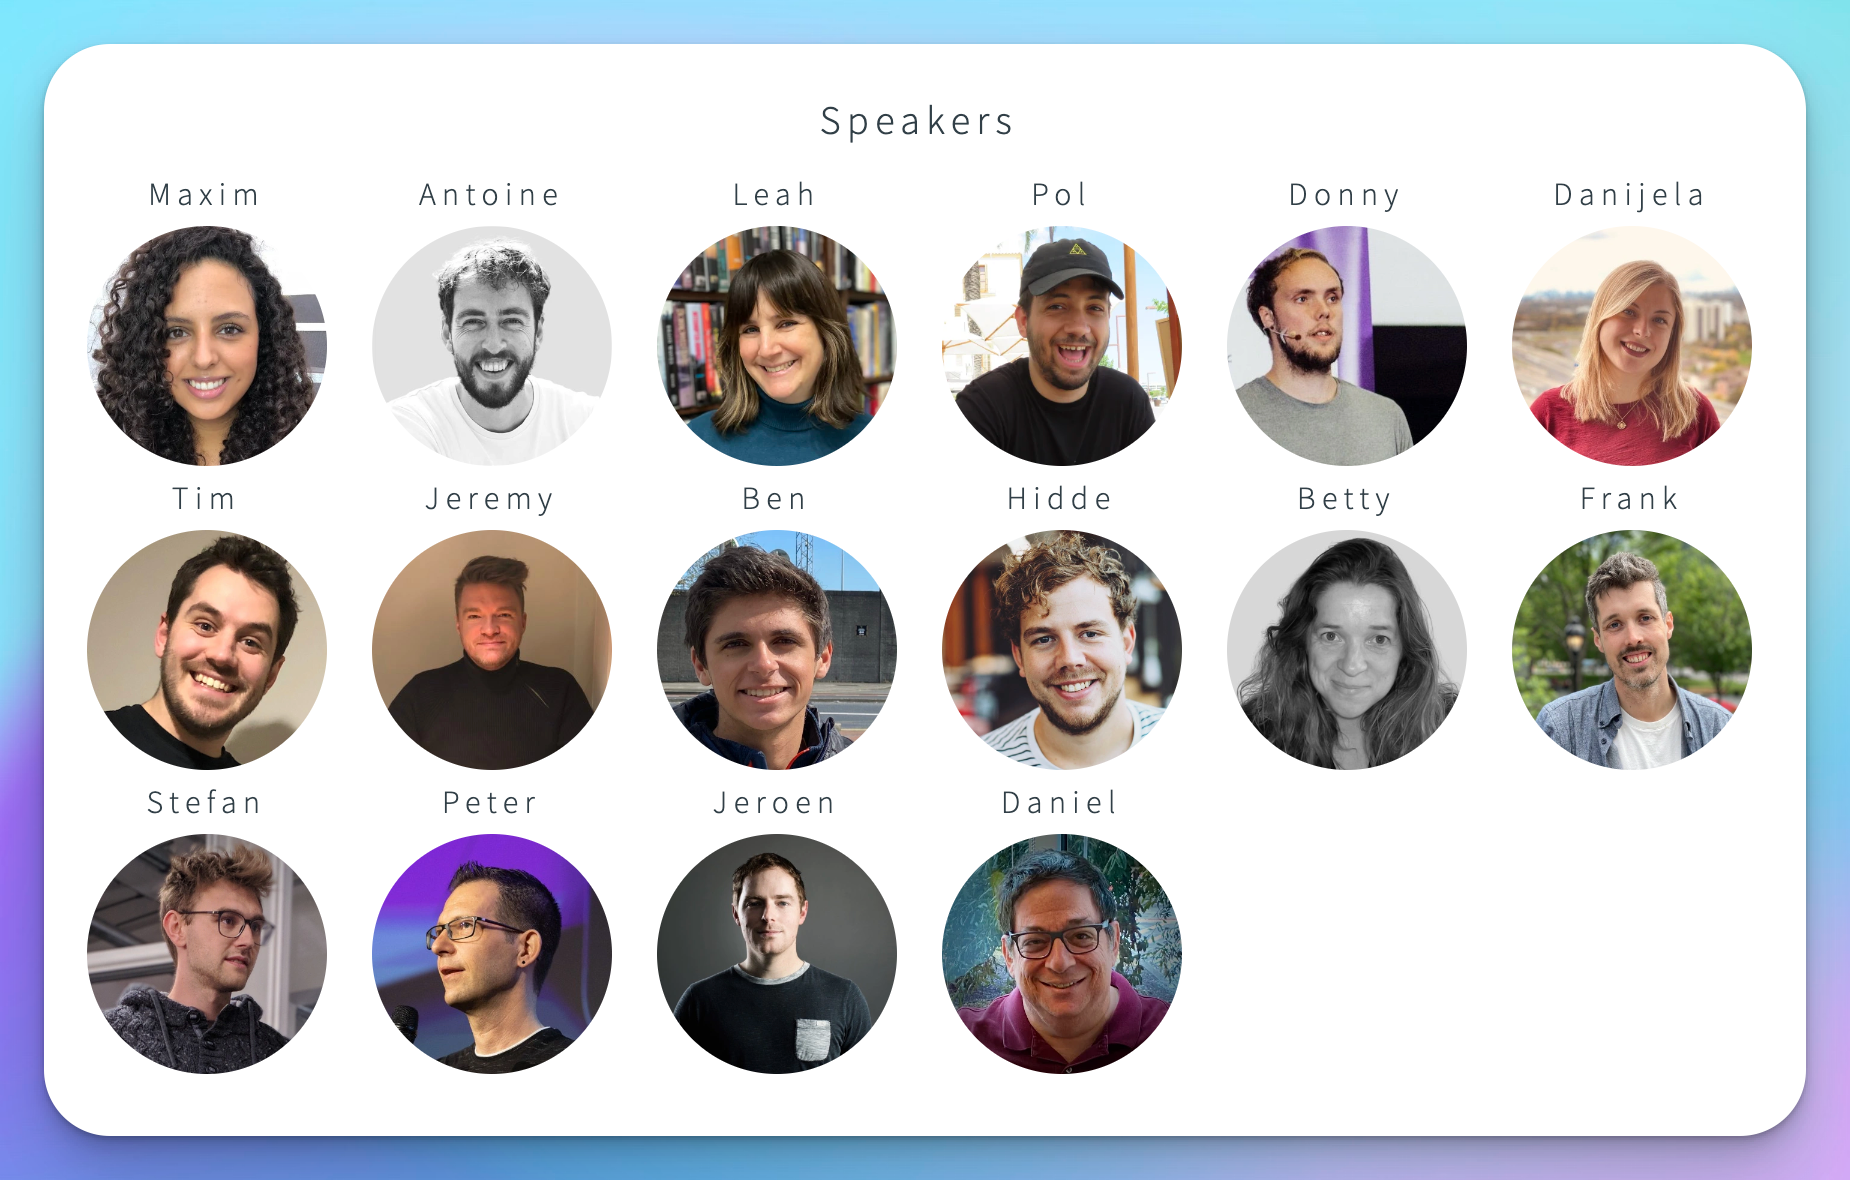 All speakers of Do iOS 2022: Maxim, Antoine, Leah, Pol, Donny, Danijela, Tim, Jeremy, Ben, Hidde, Betty, Frank, Stefan, Peter, Jeroen and Daniel.